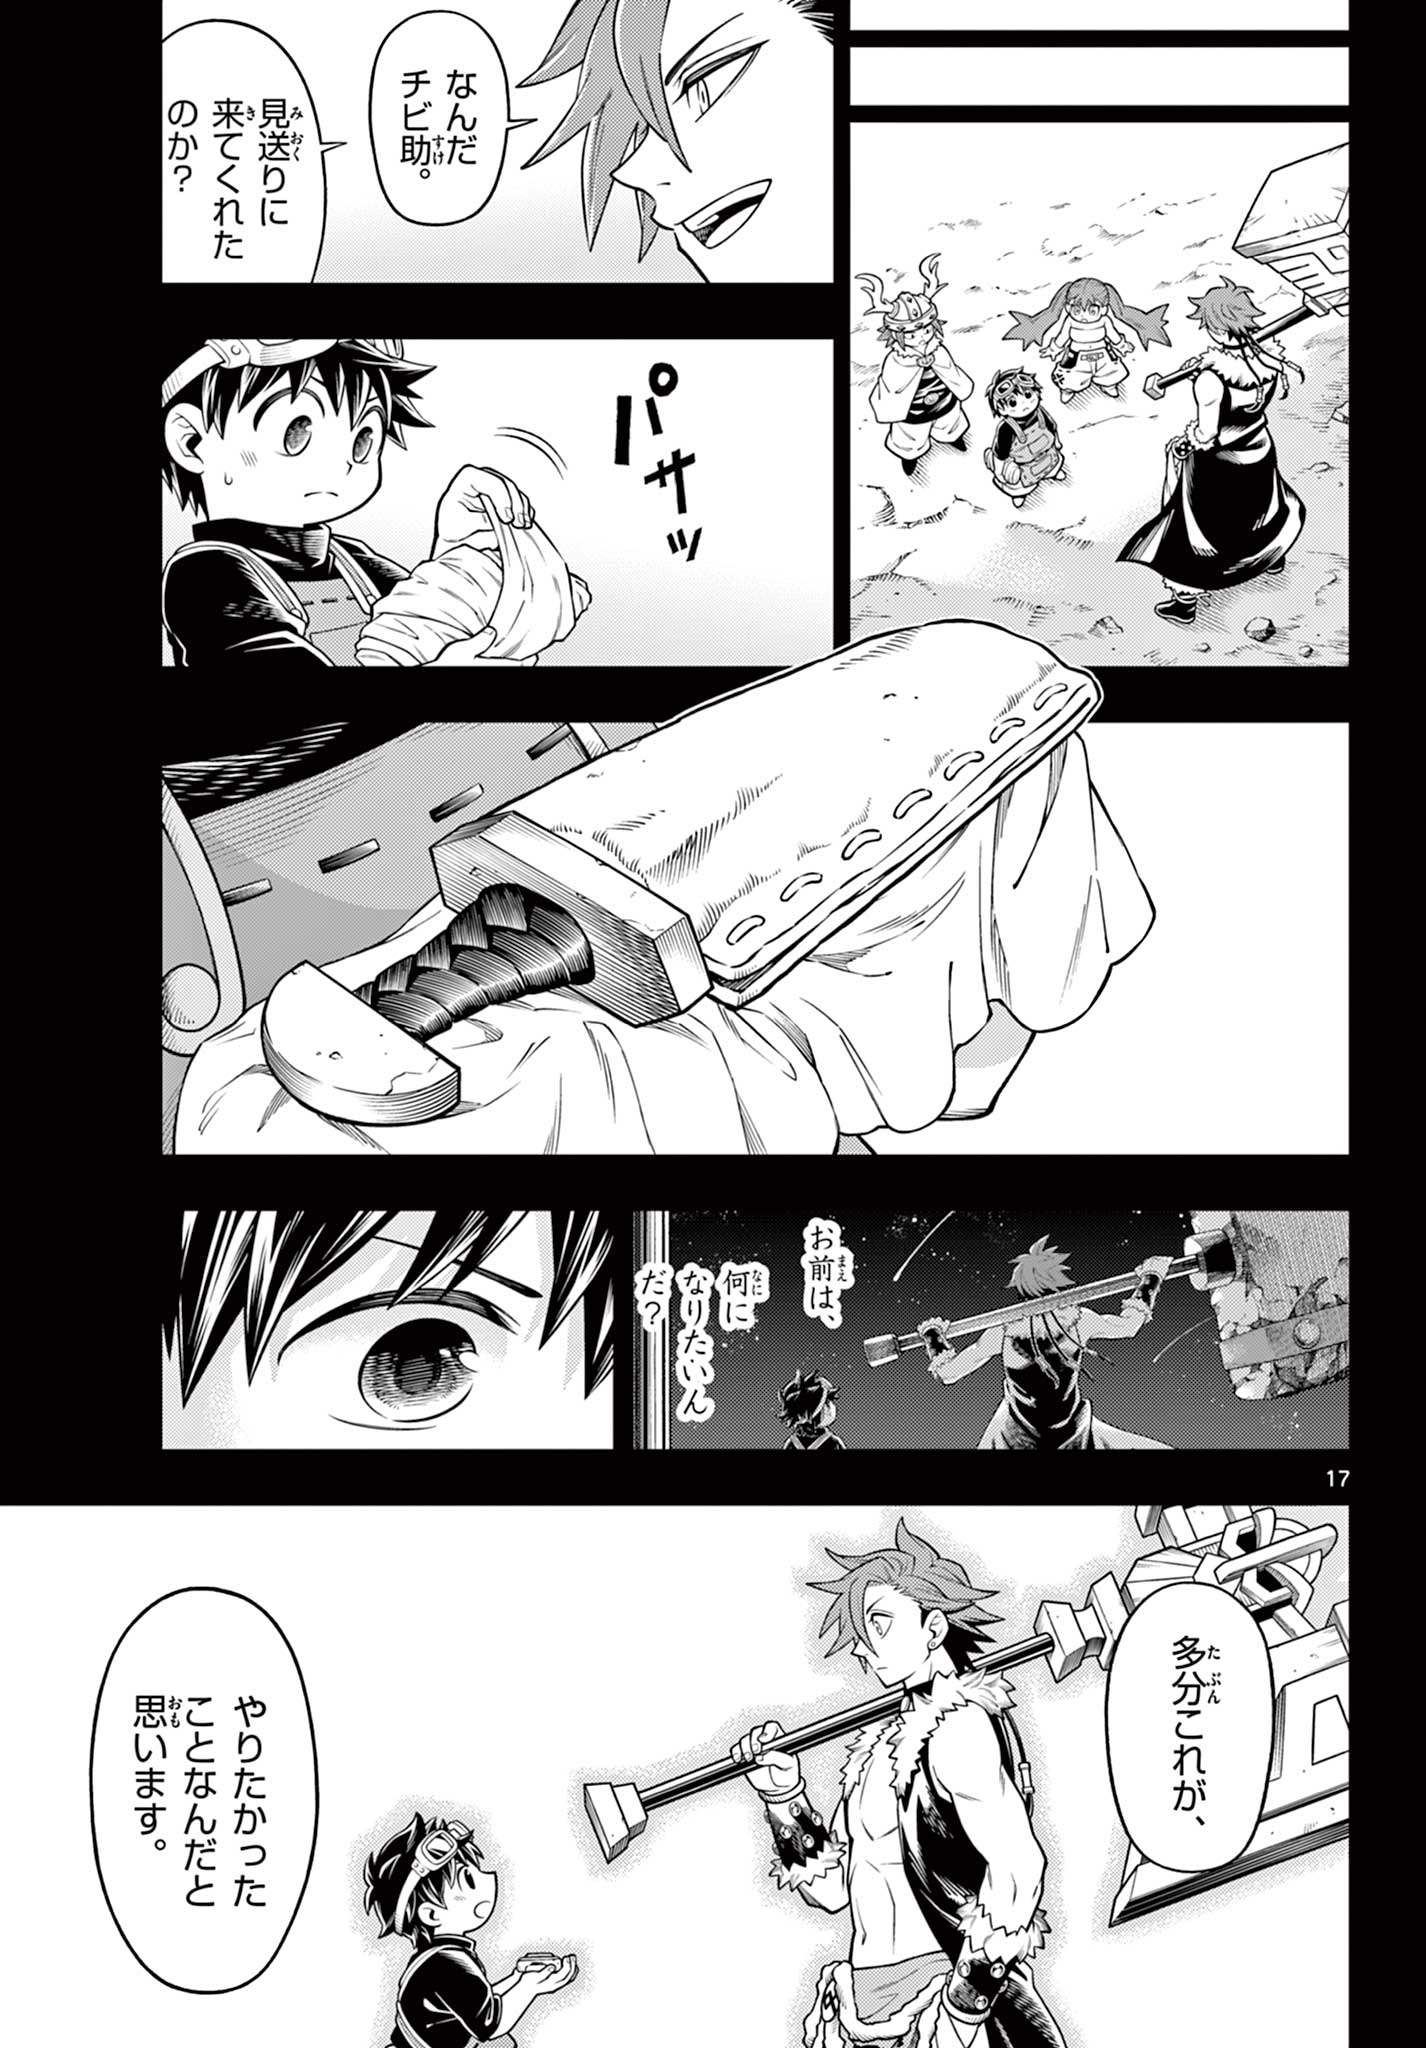 Soara to Mamono no ie - Chapter 24 - Page 17